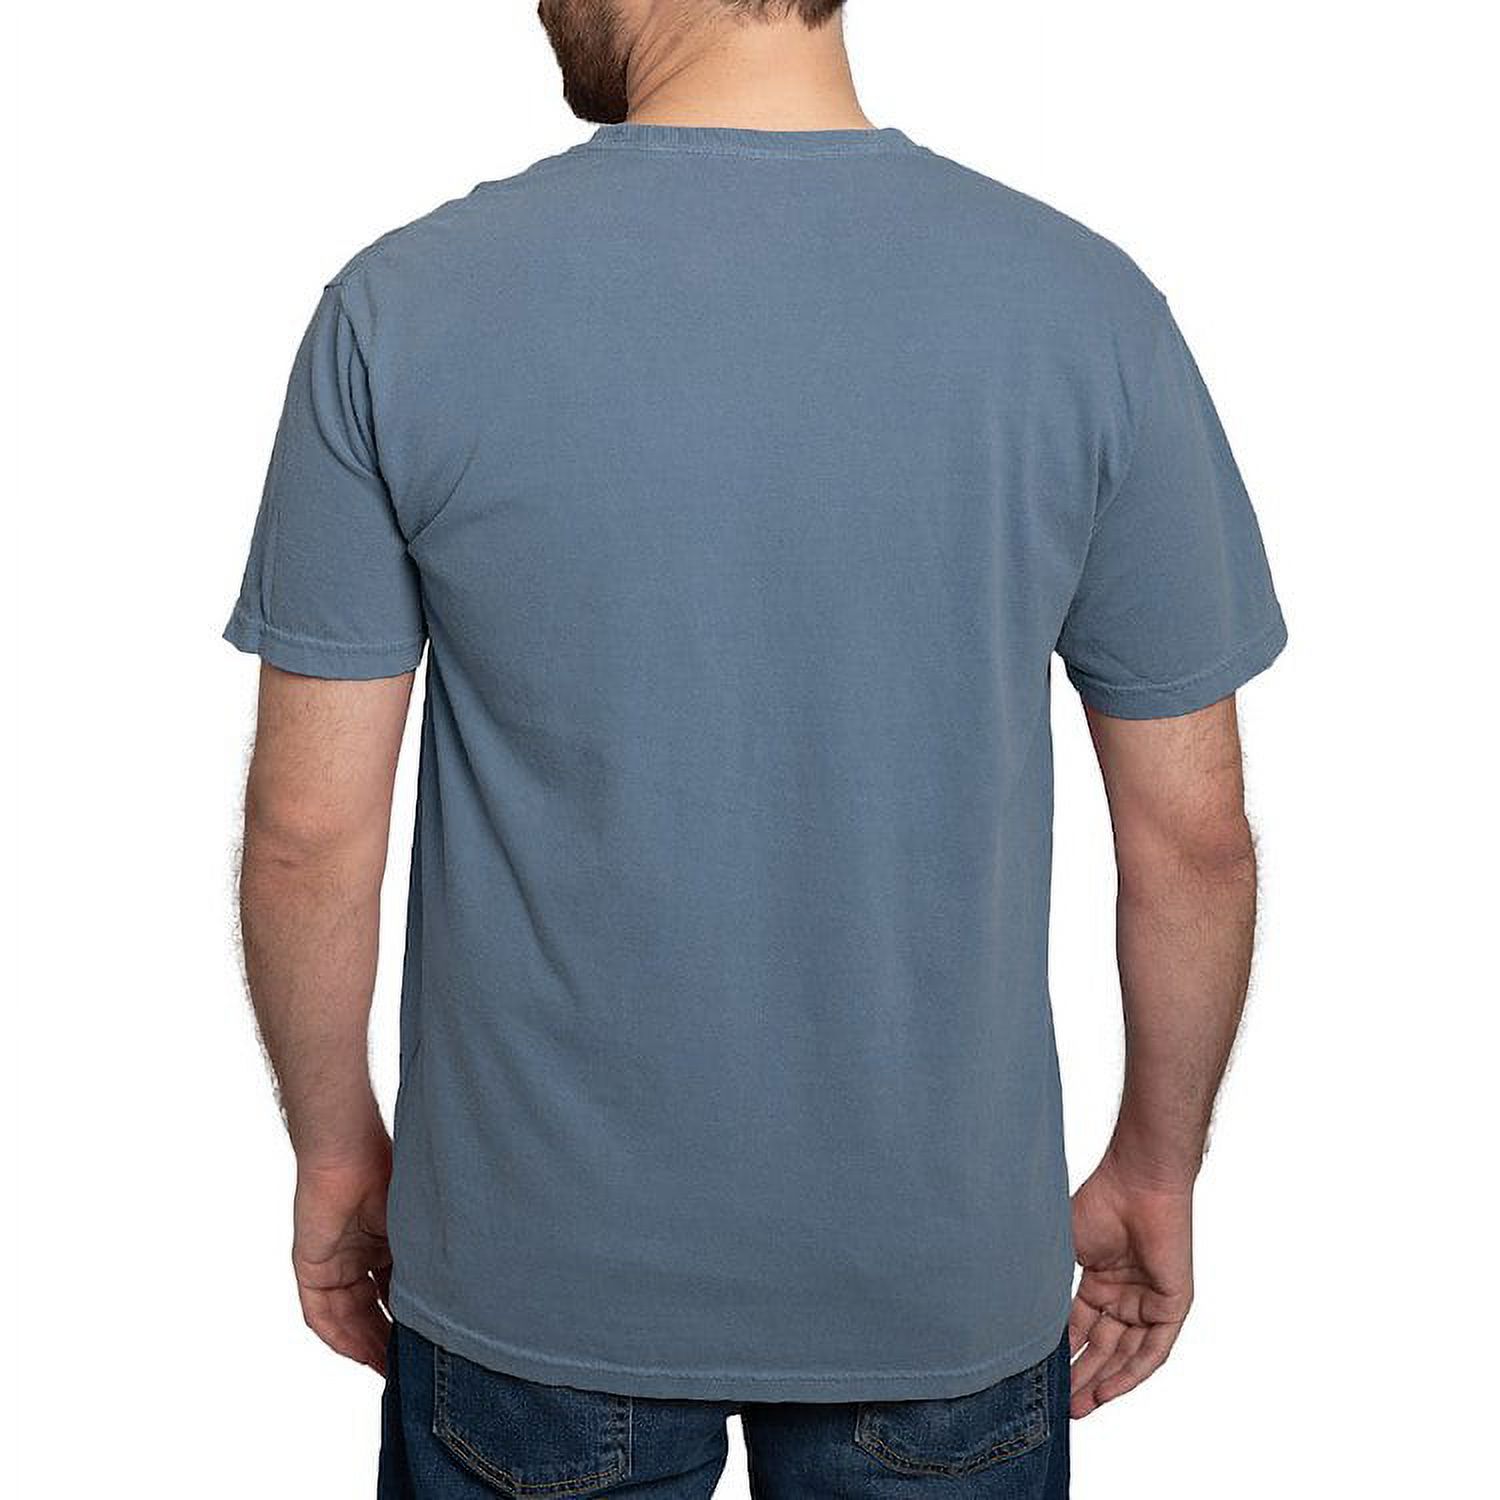 CafePress - Rainbowtree Copy - Mens Comfort Colors Shirt - image 2 of 5